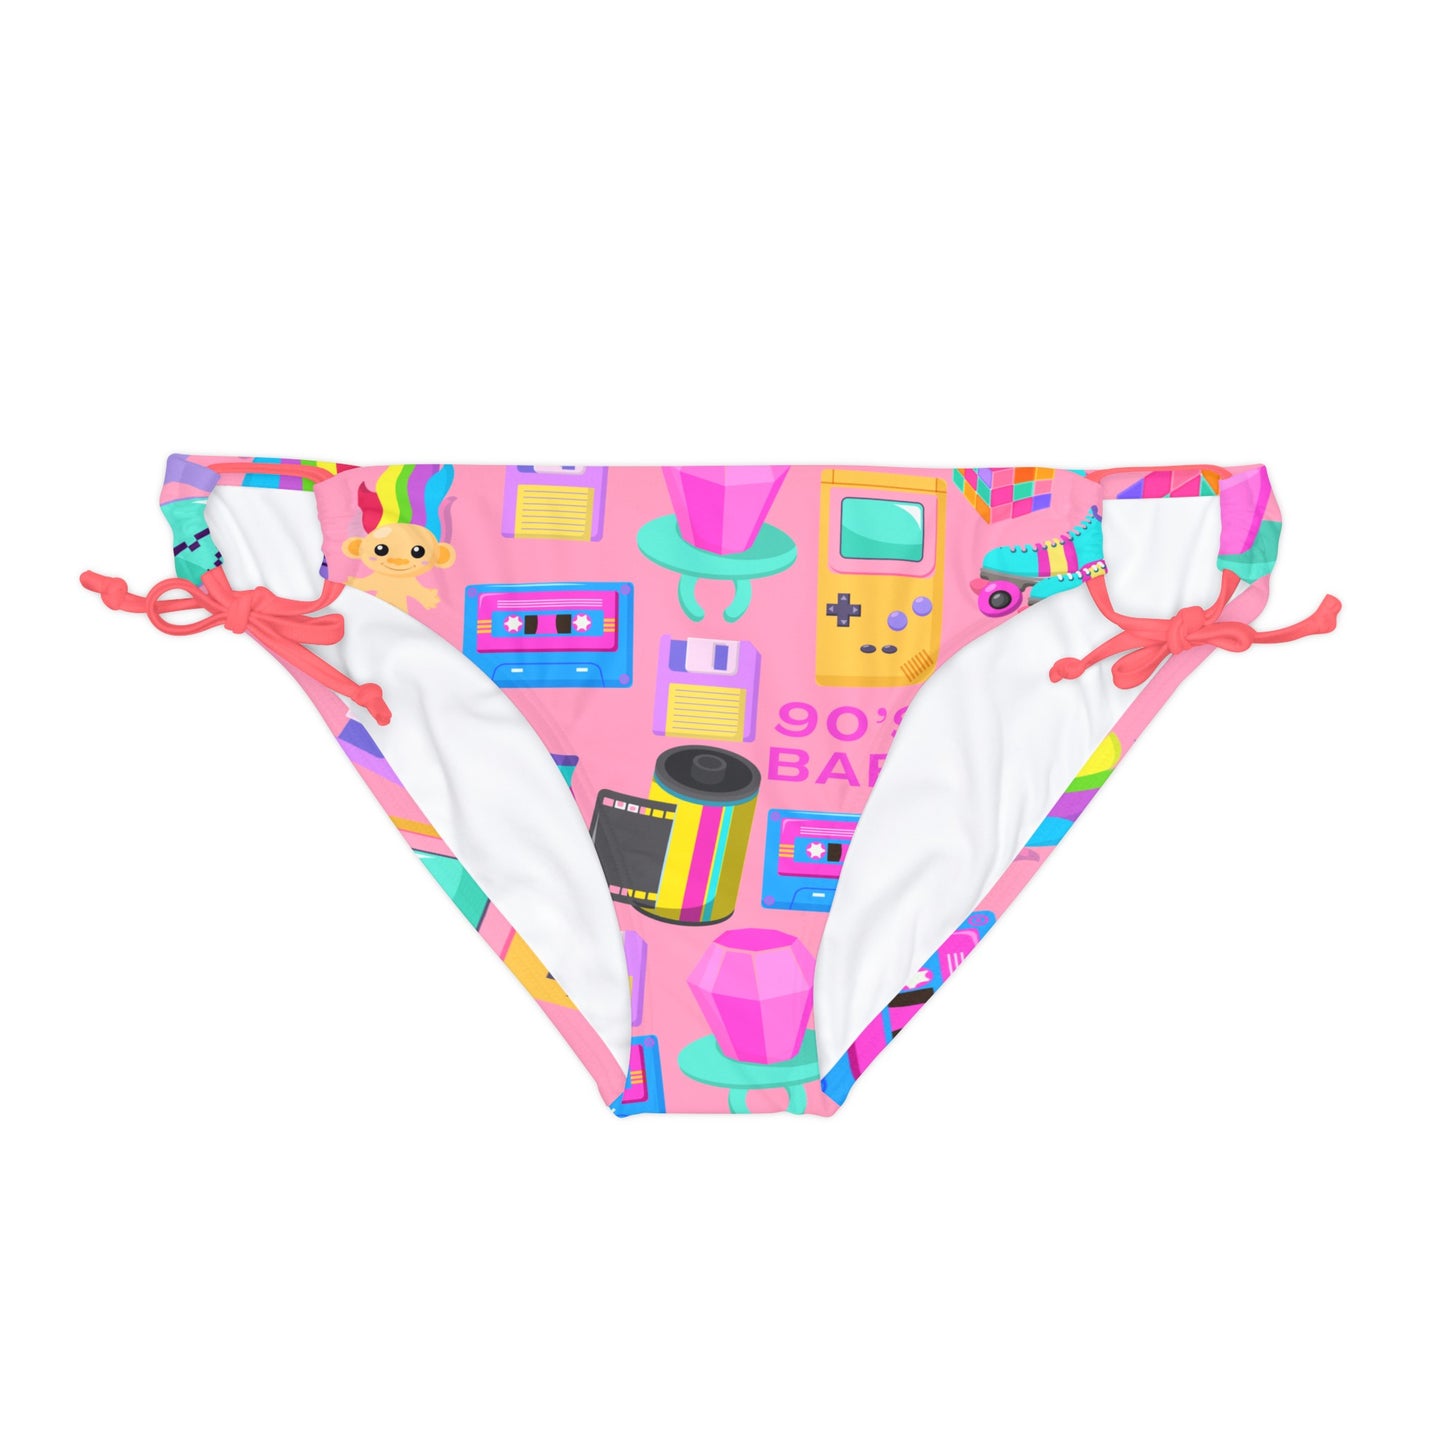 90’s Babe Loop Tie Side Bikini Bottom